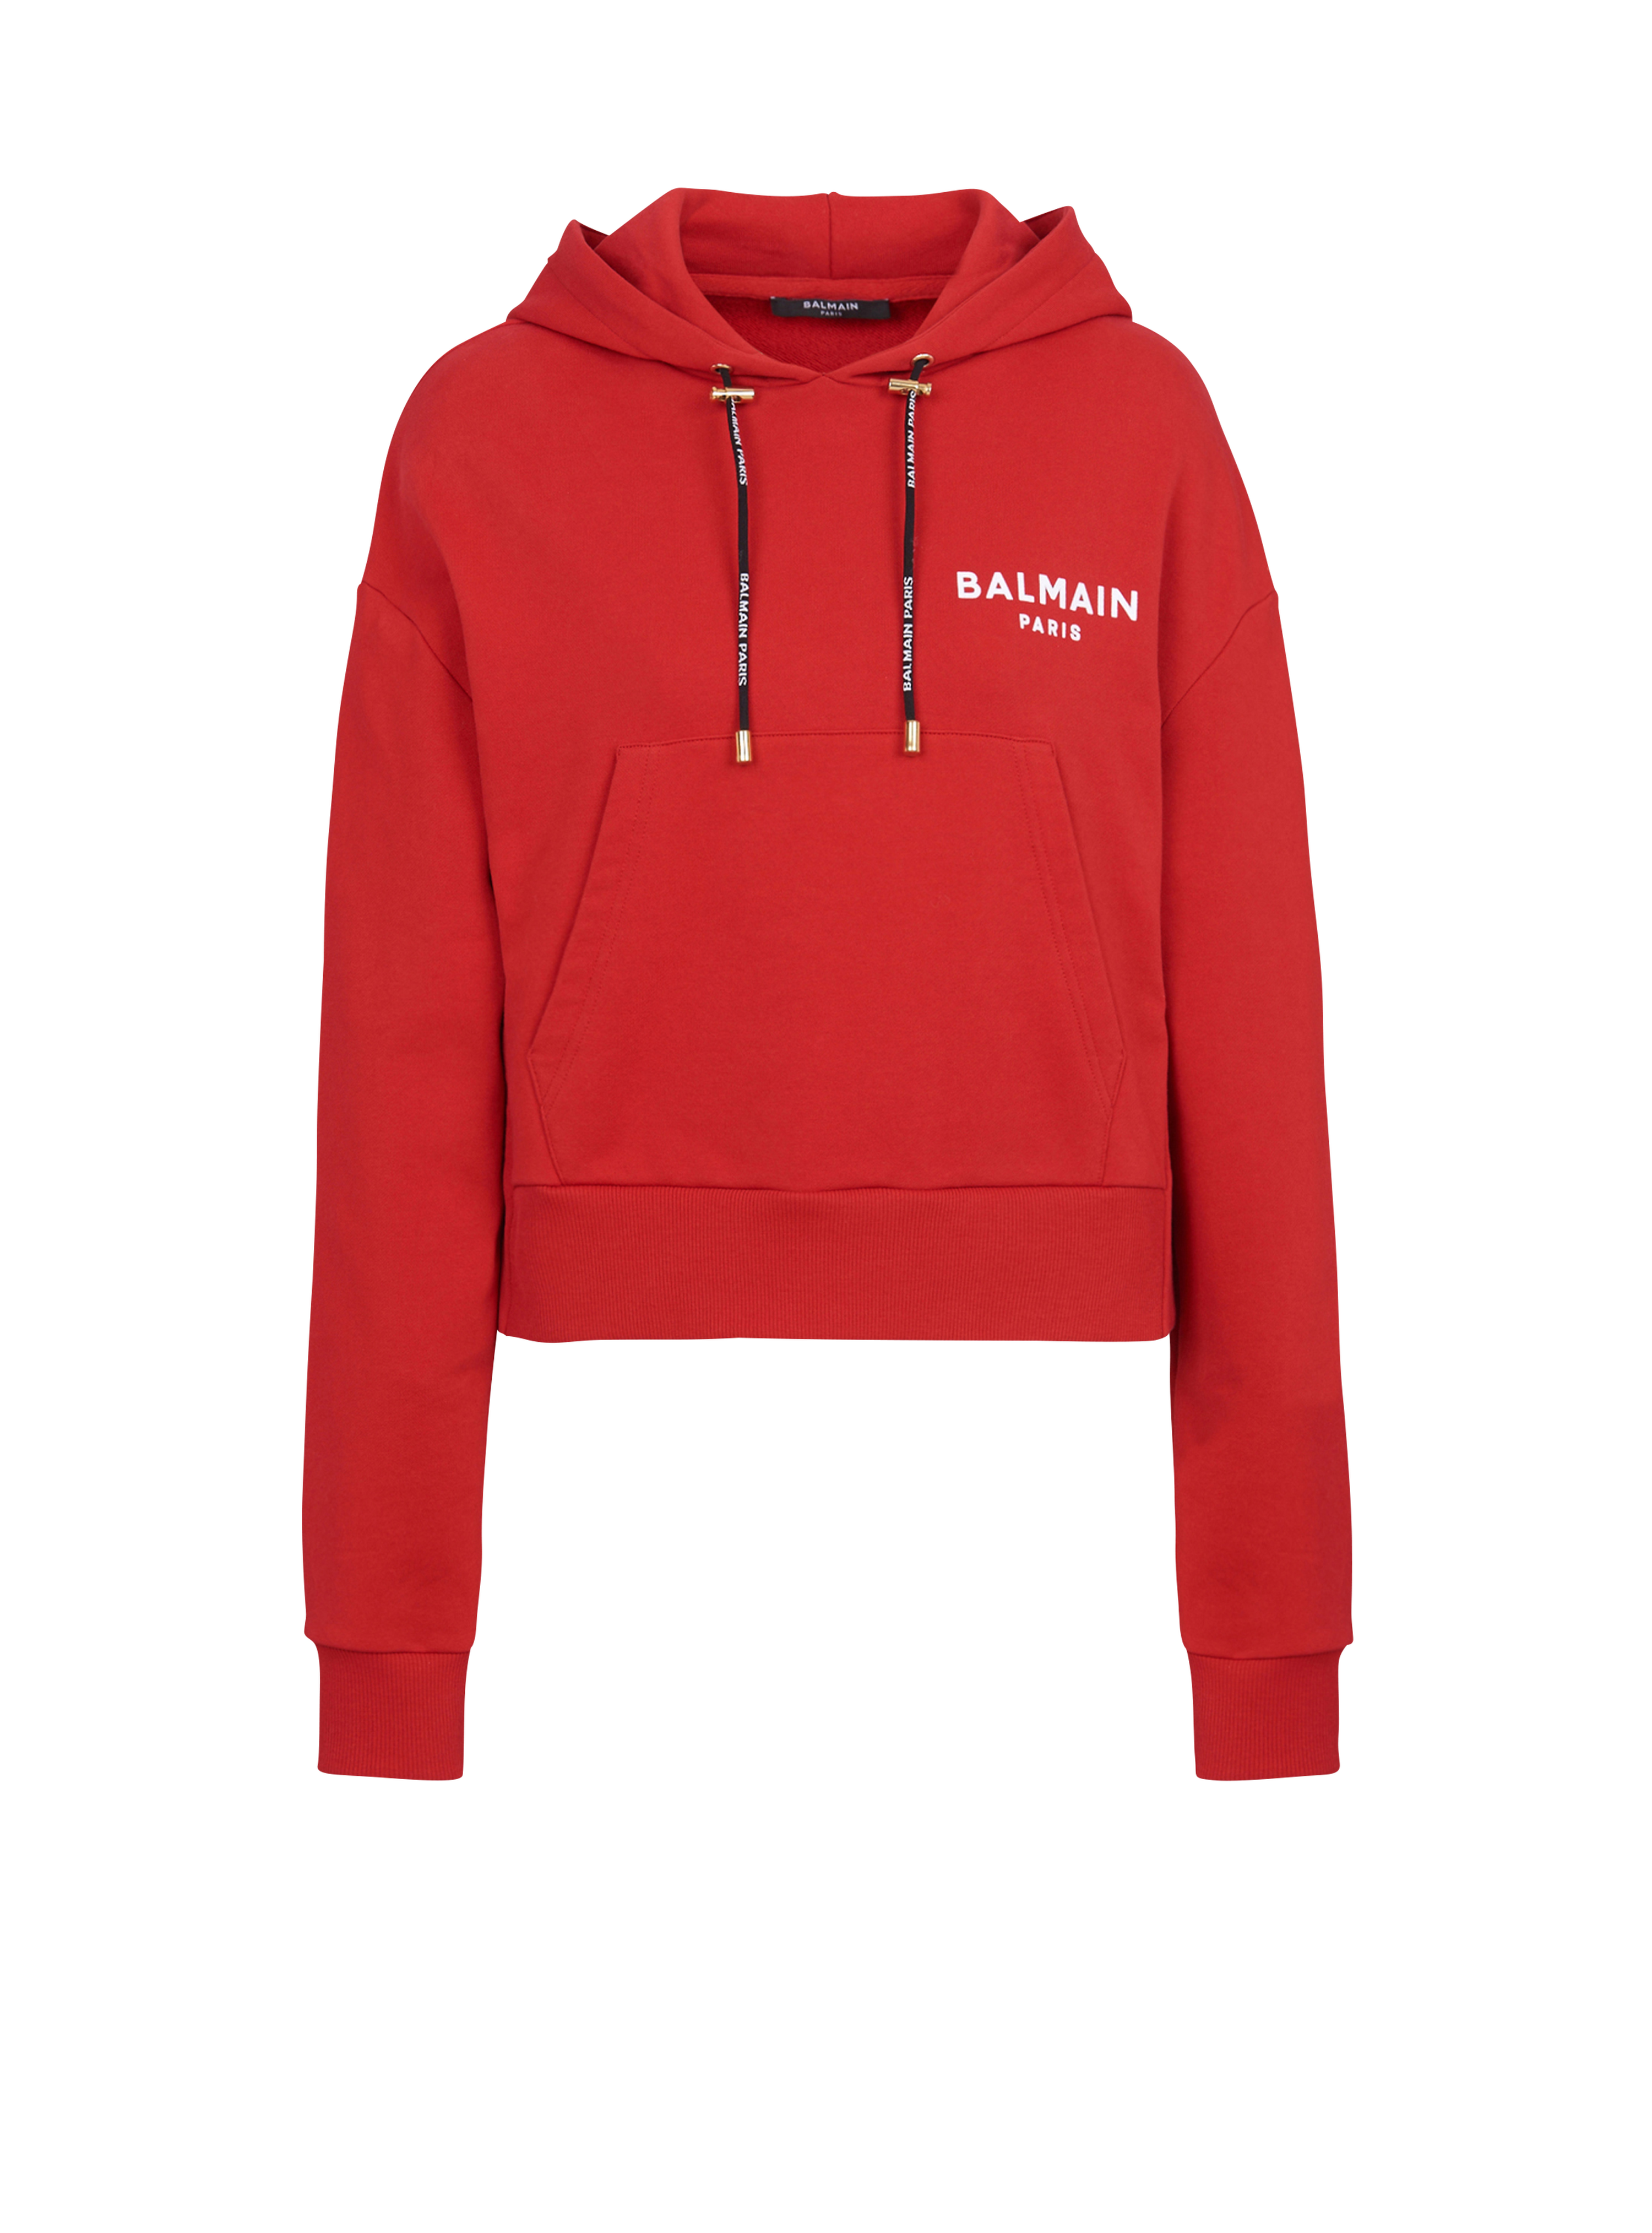 Eco-designed cotton sweatshirt with flocked Balmain logo, red